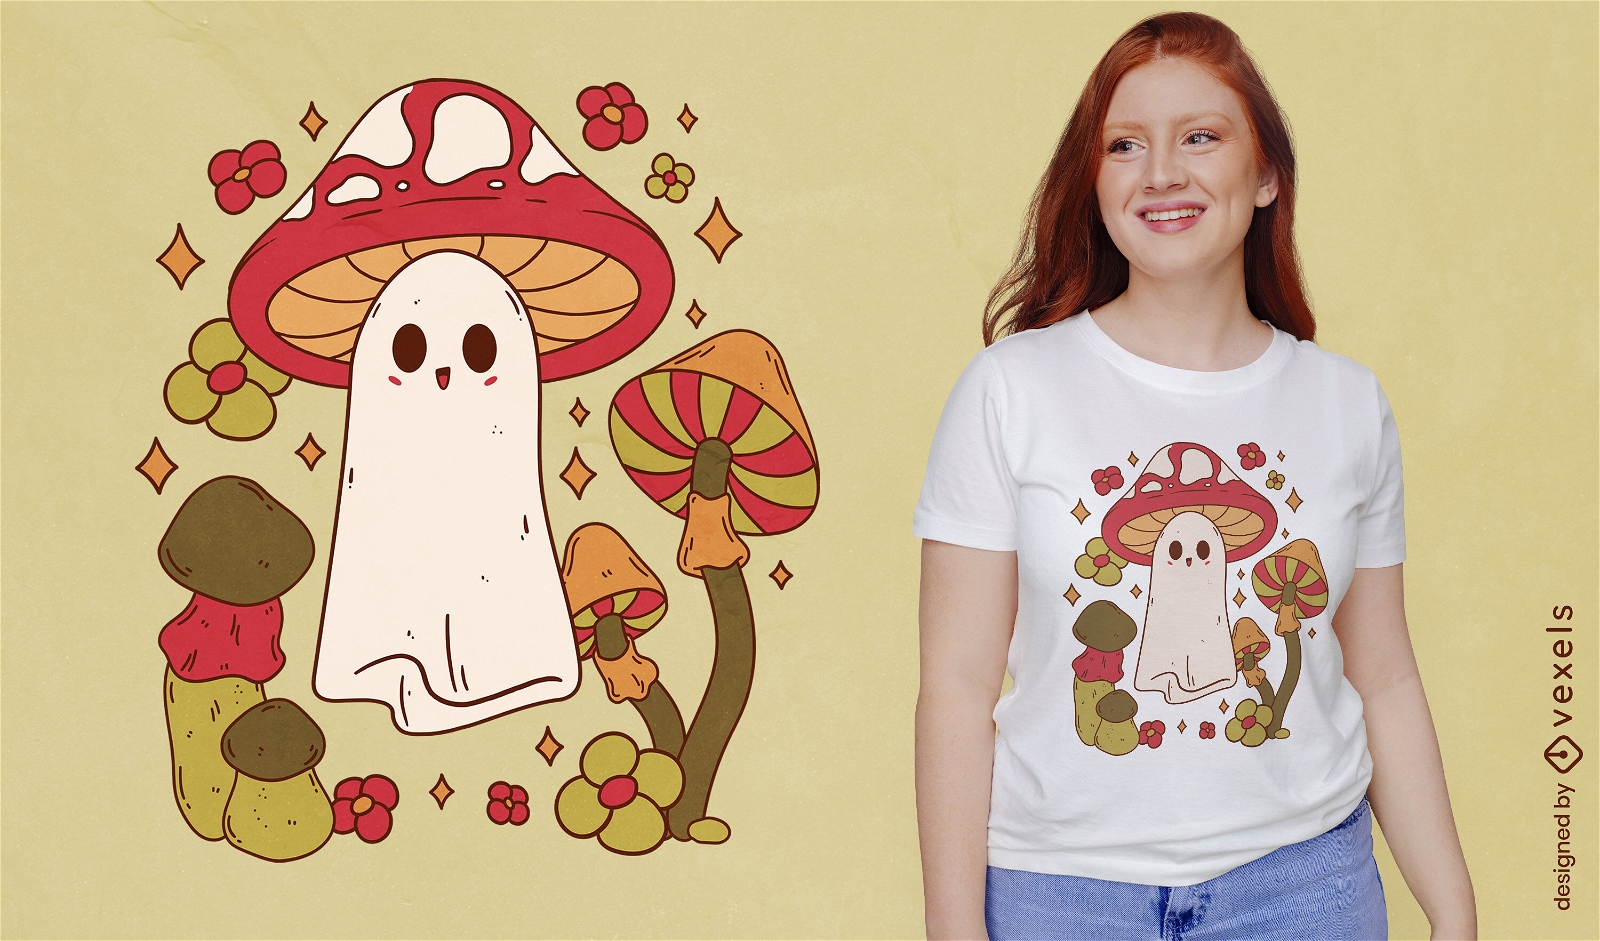 Mushroom ghost t-shirt design